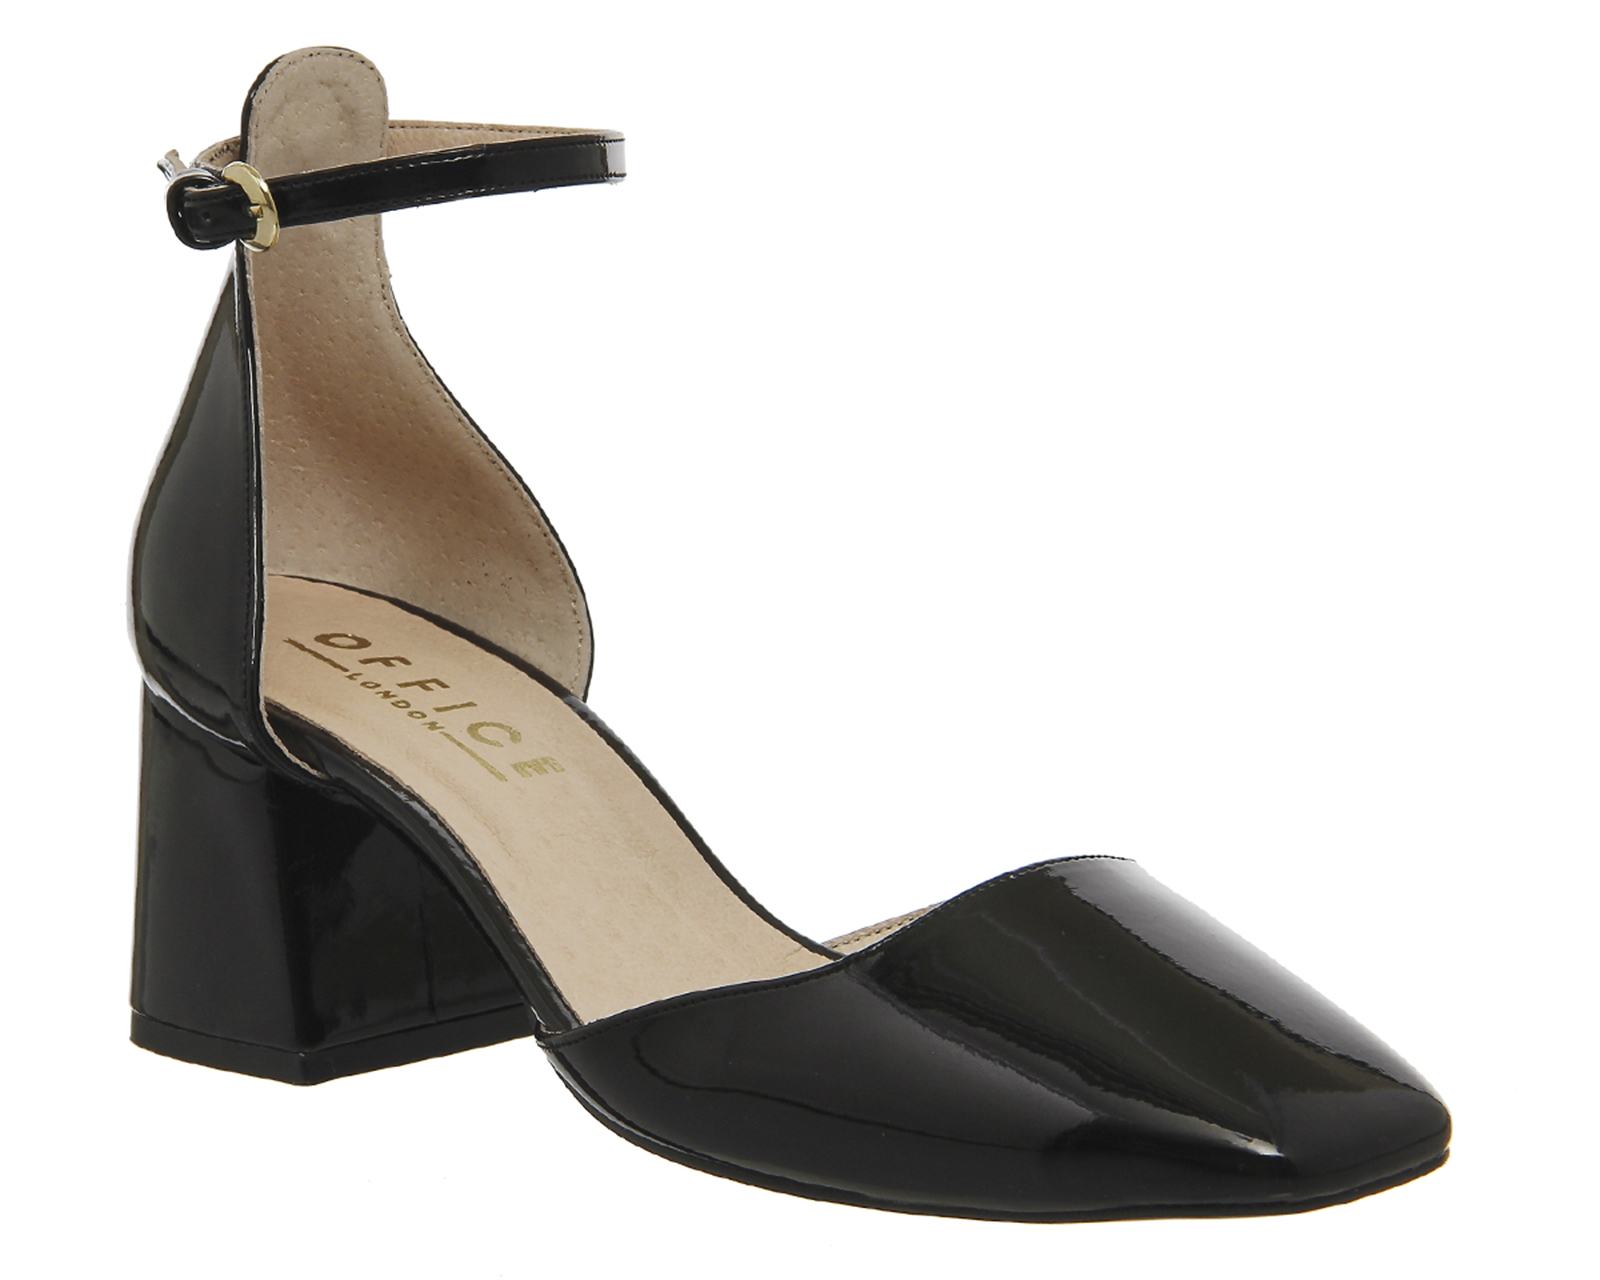 black patent mid heel shoes